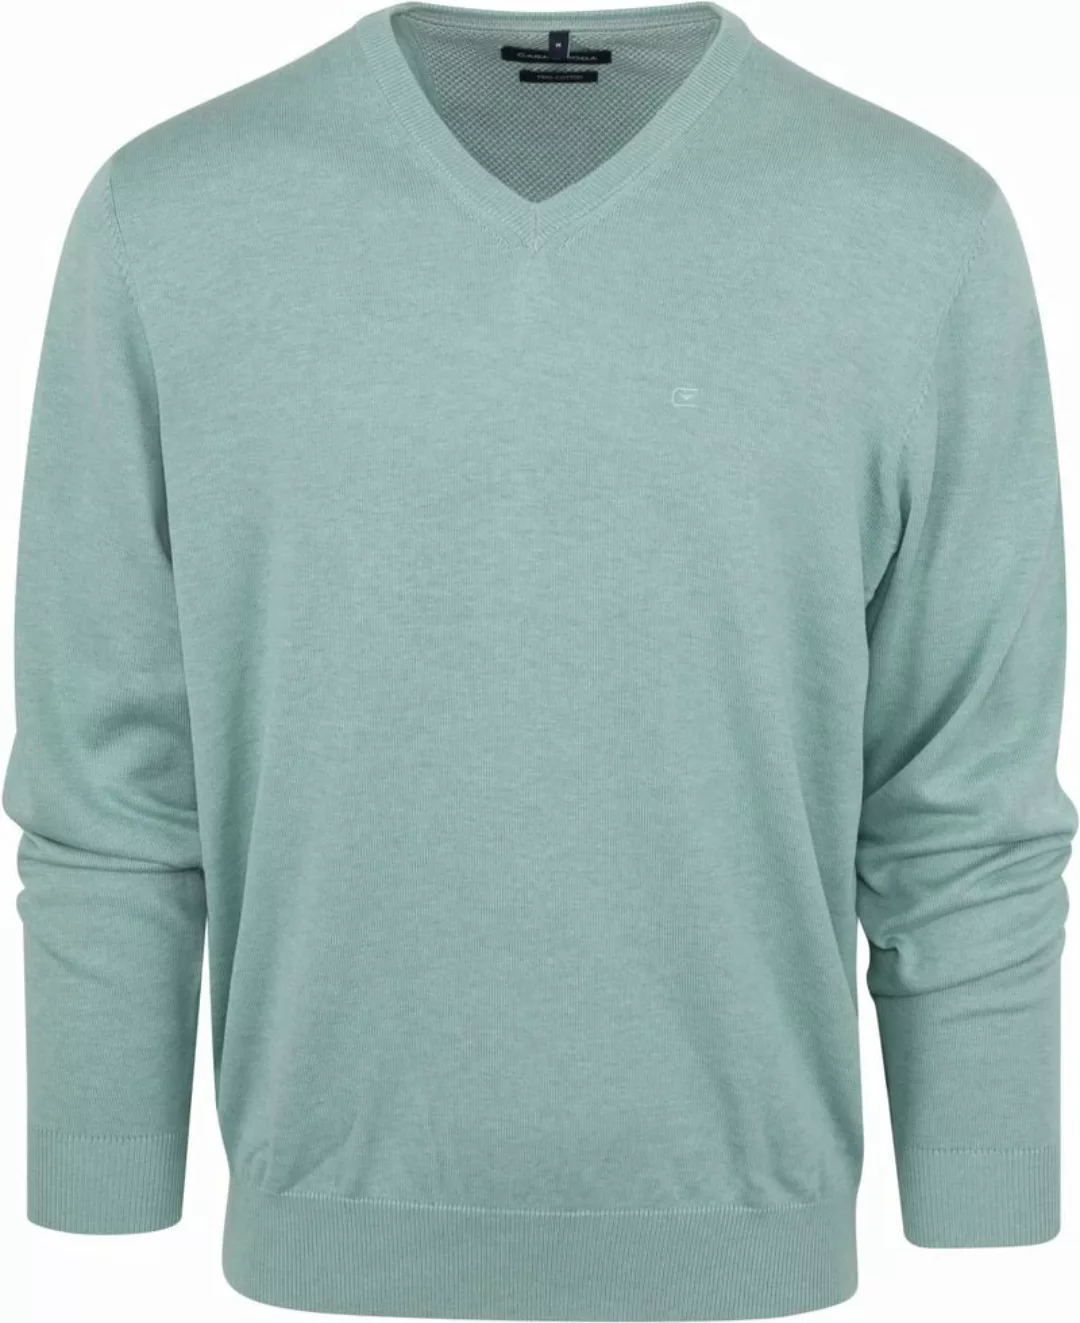 Casa Moda Pullover V-Ausschnitt Mintgrün - Größe M günstig online kaufen